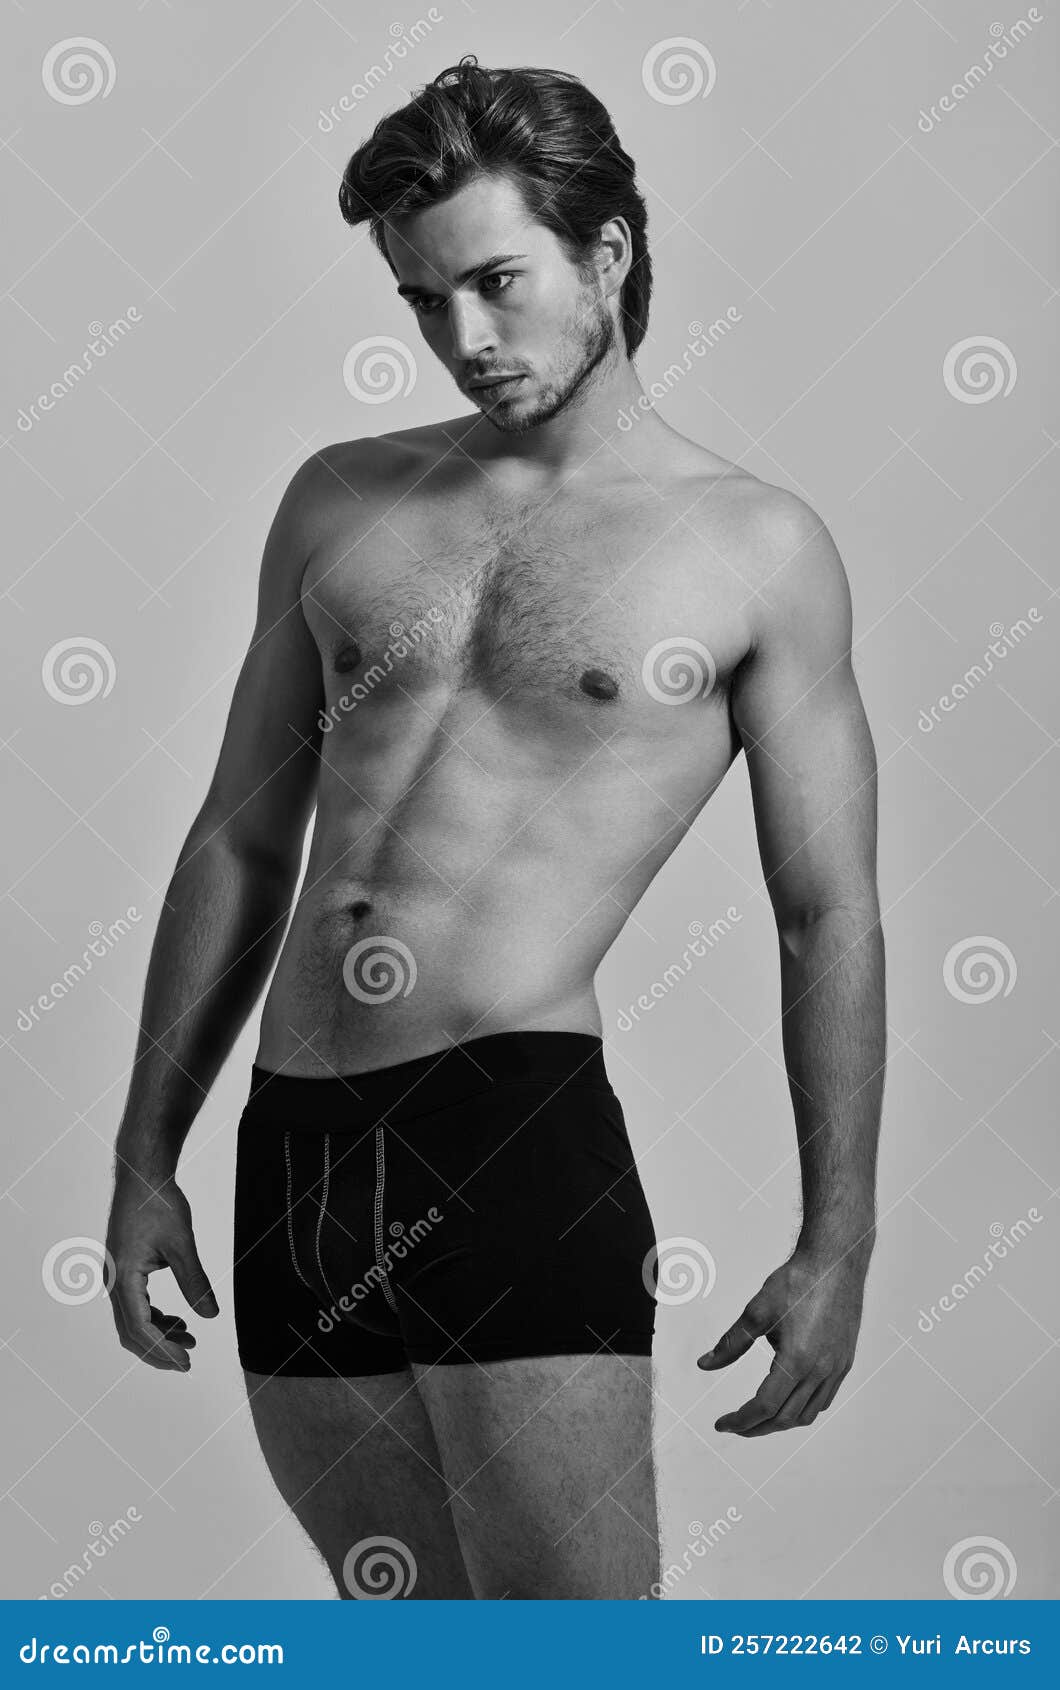 Hairy Man Underwear Stock Photos